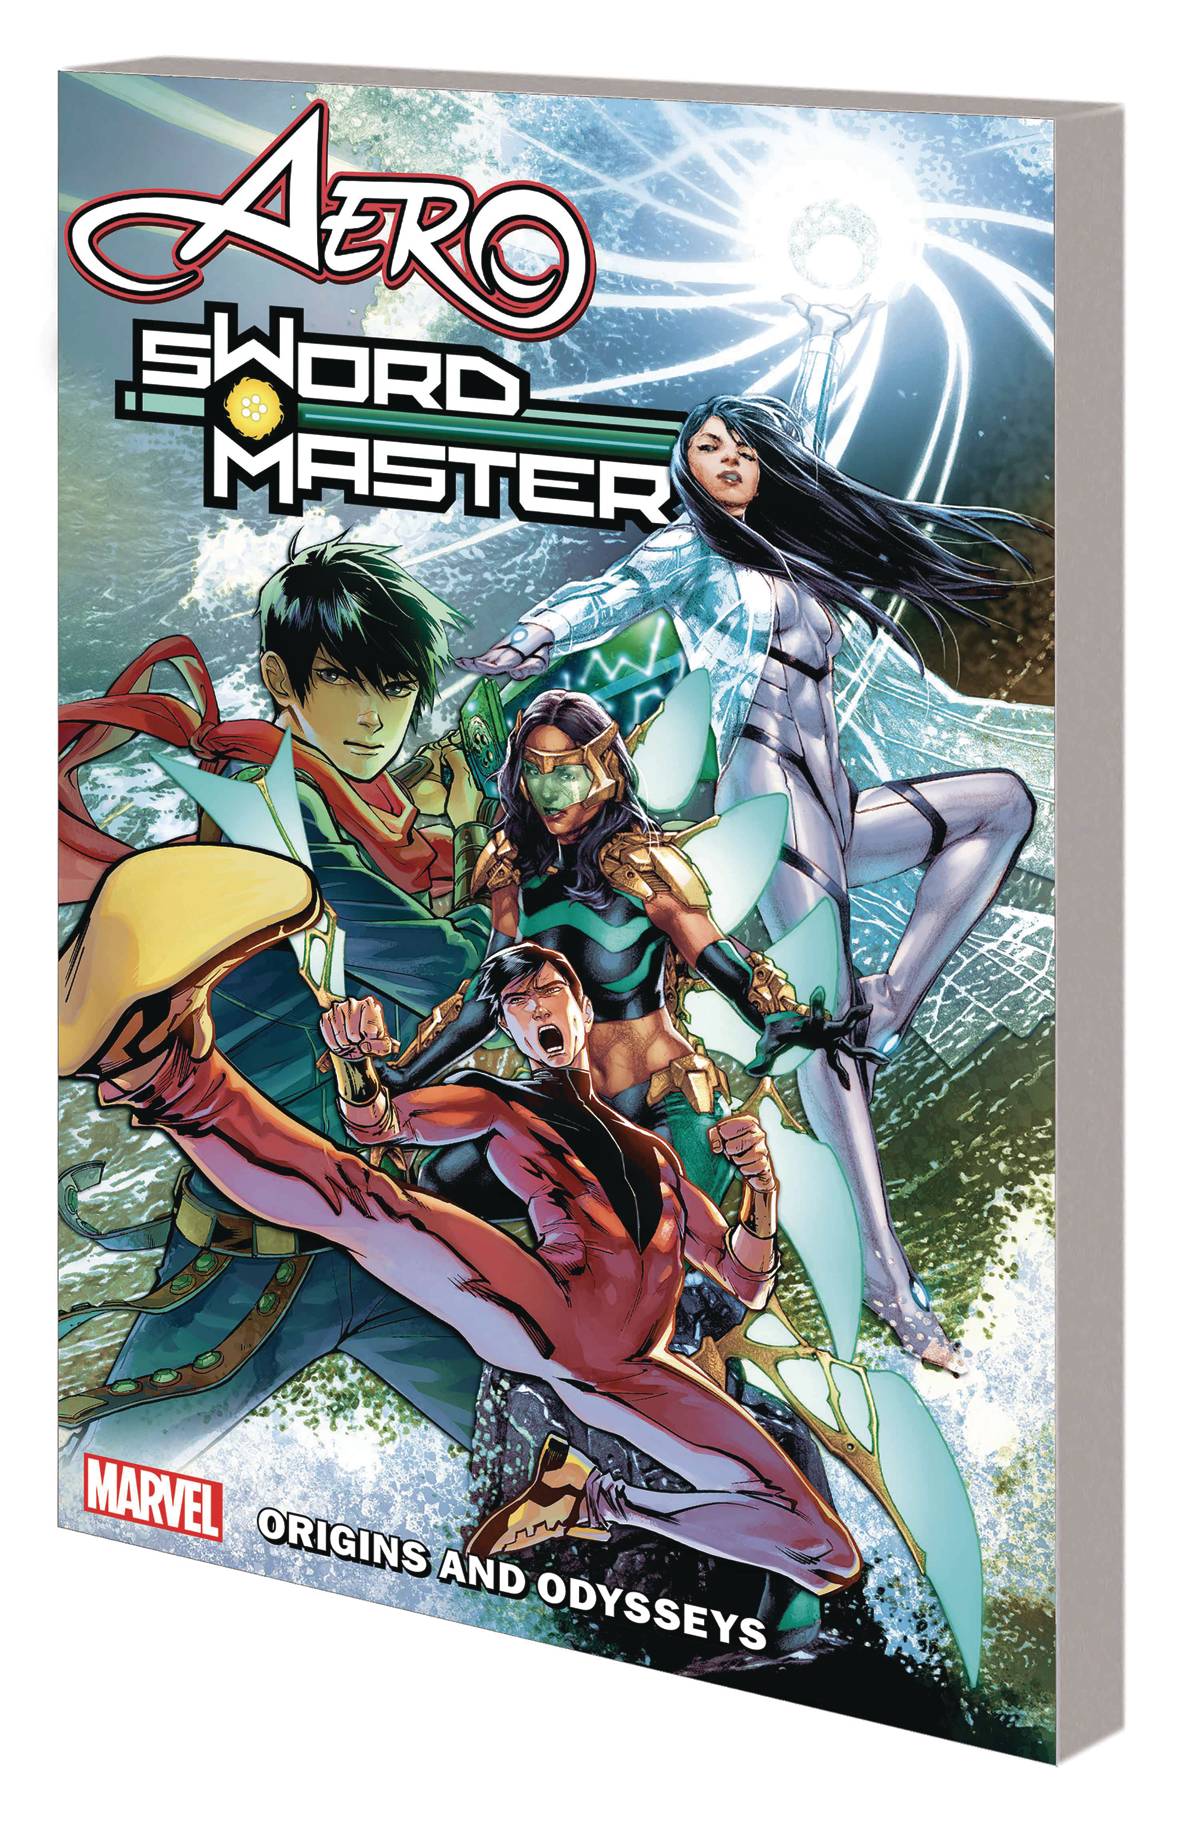 Aero & Sword Master Origins And Odysseys